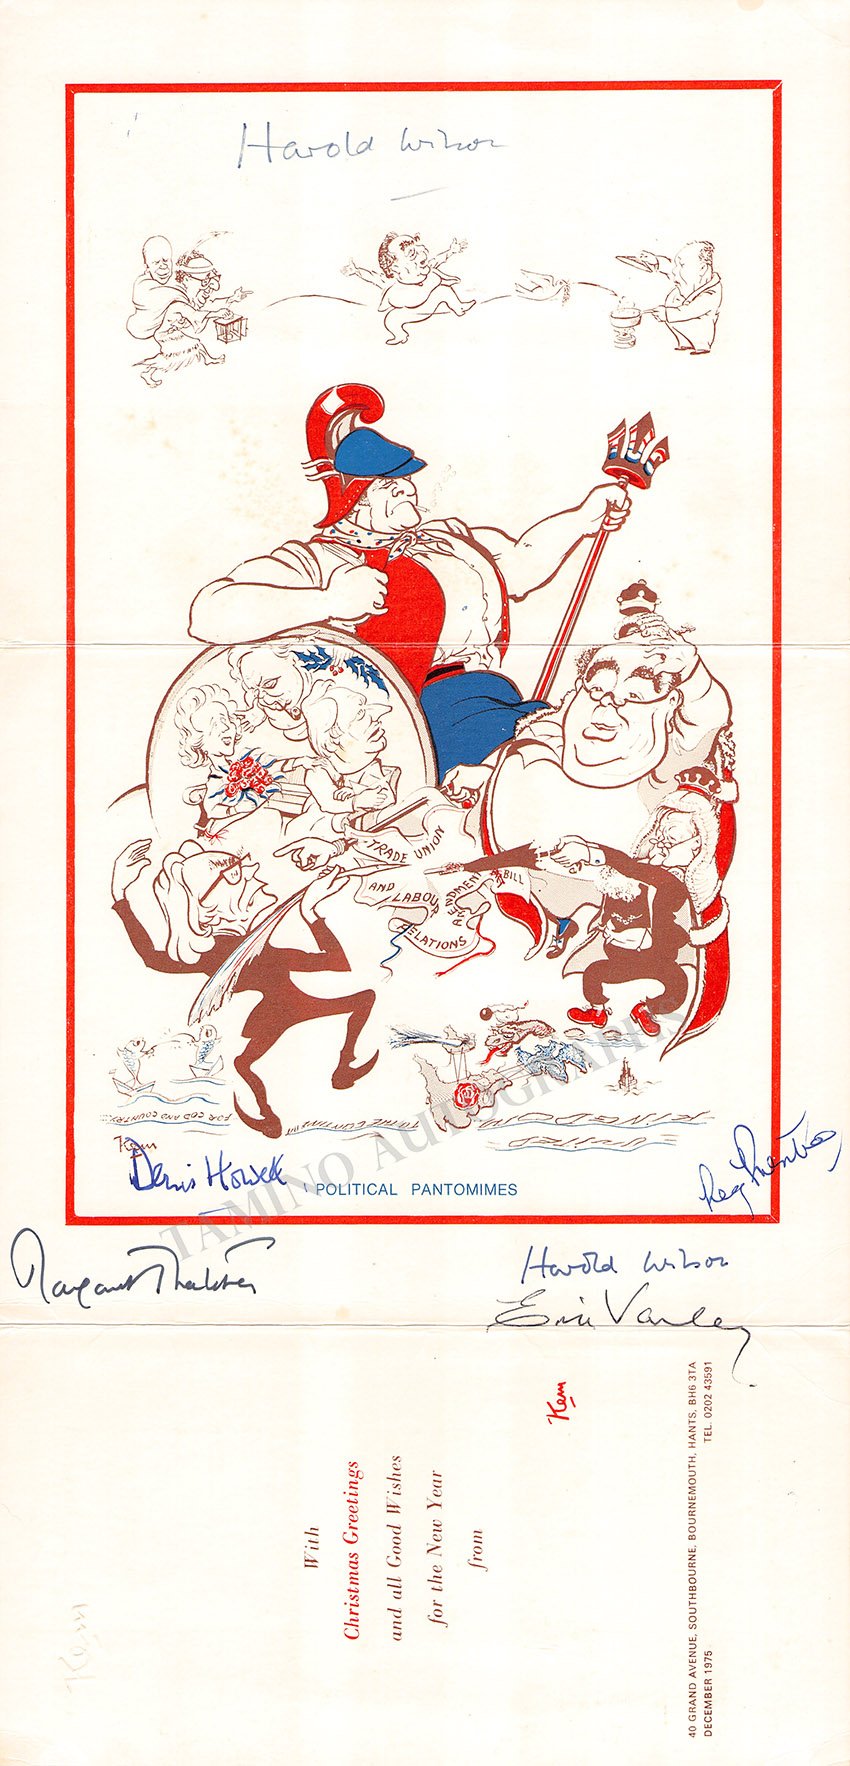 Thatcher, Margaret - Howell, Denis - Varley, Eric - Prentice, Reg - Christmas Card signed by all - Tamino